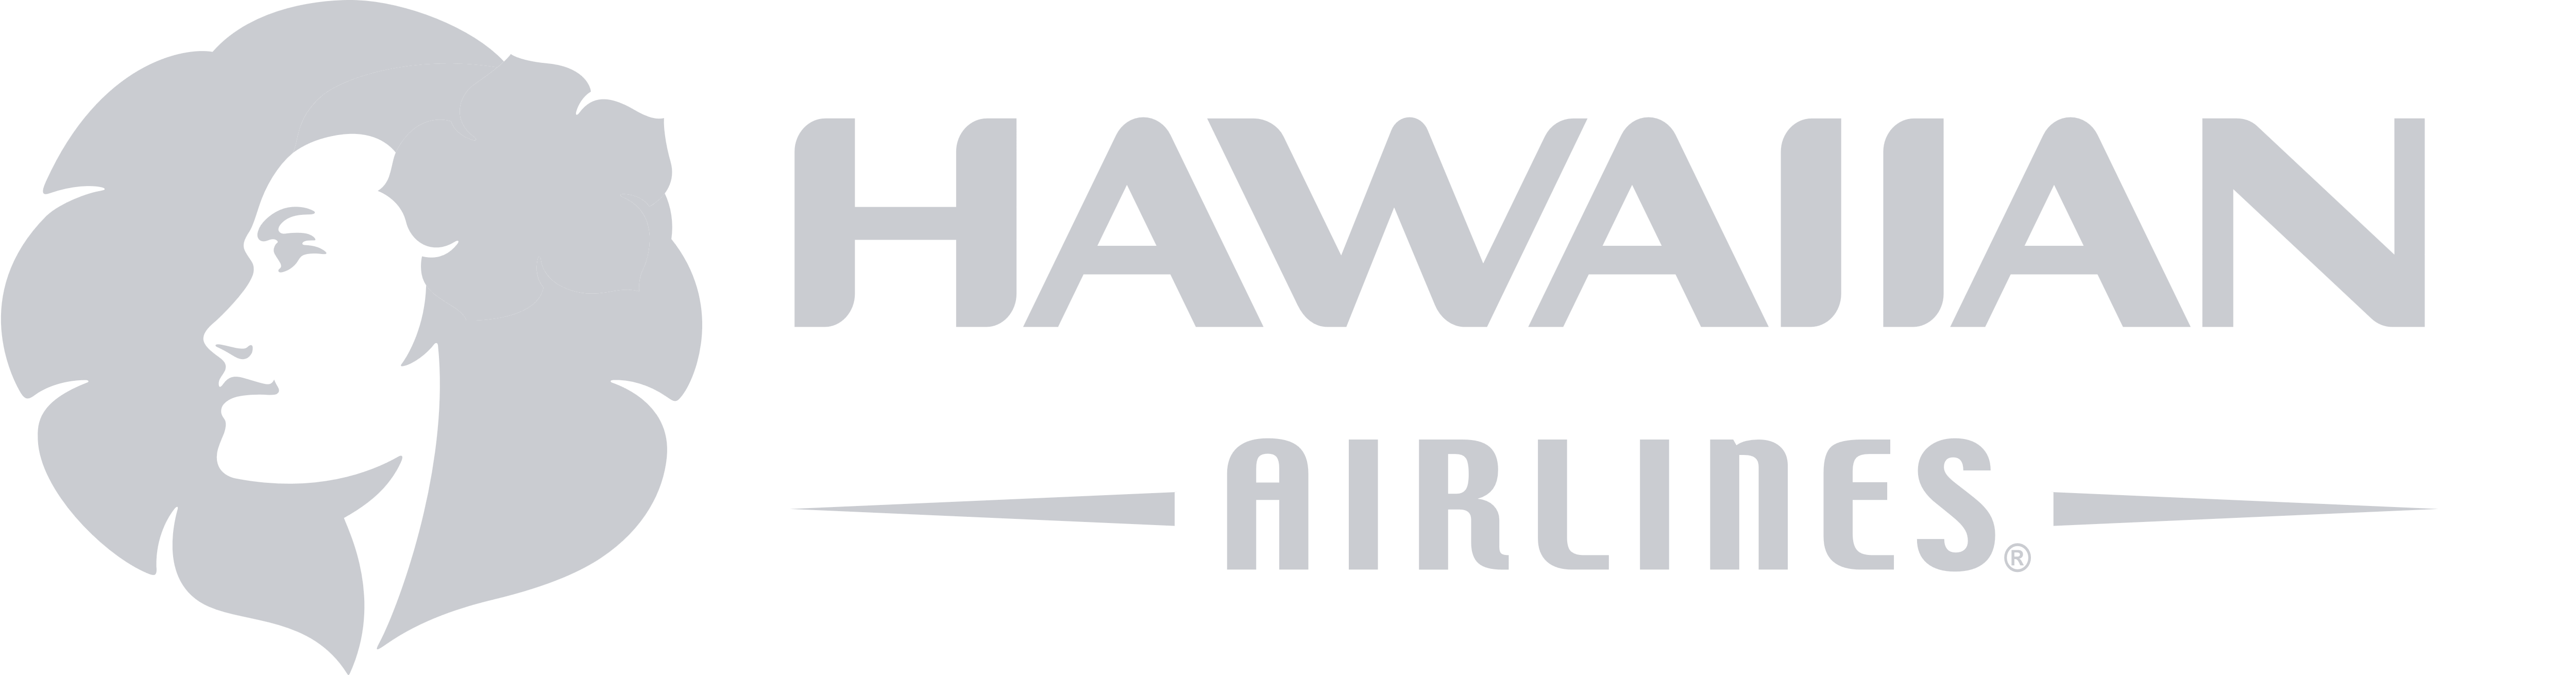 Hawaiian_Airlines_logo_logotype